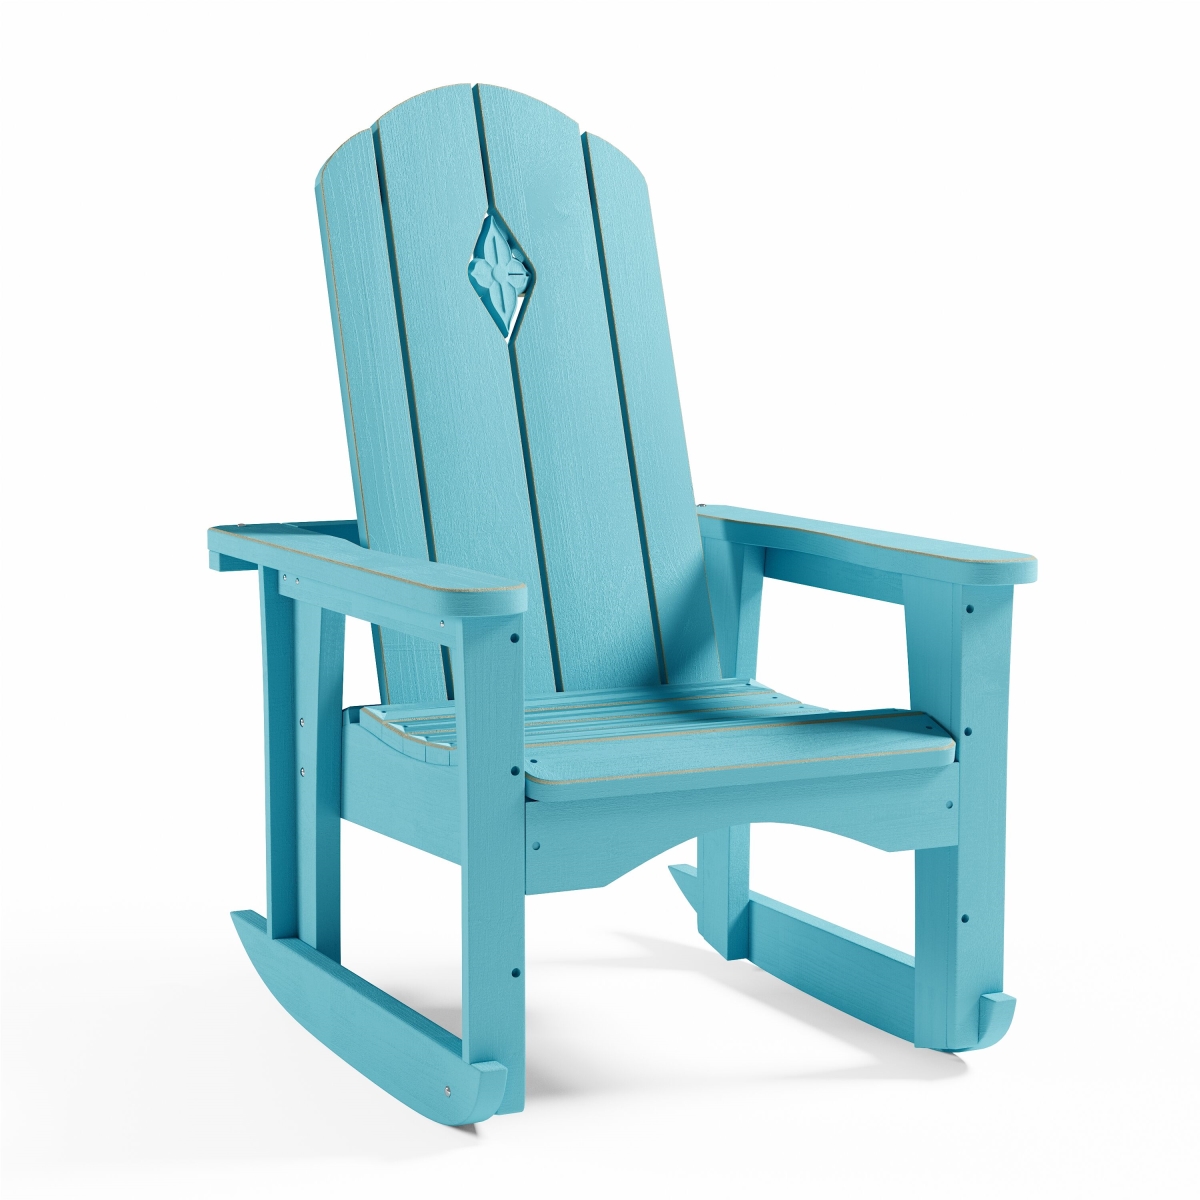 UWharrie Chair S312-091 Cali Wood Rocker Lounge Chair, True Black Pine - 30 x 33.5 x 42 in.